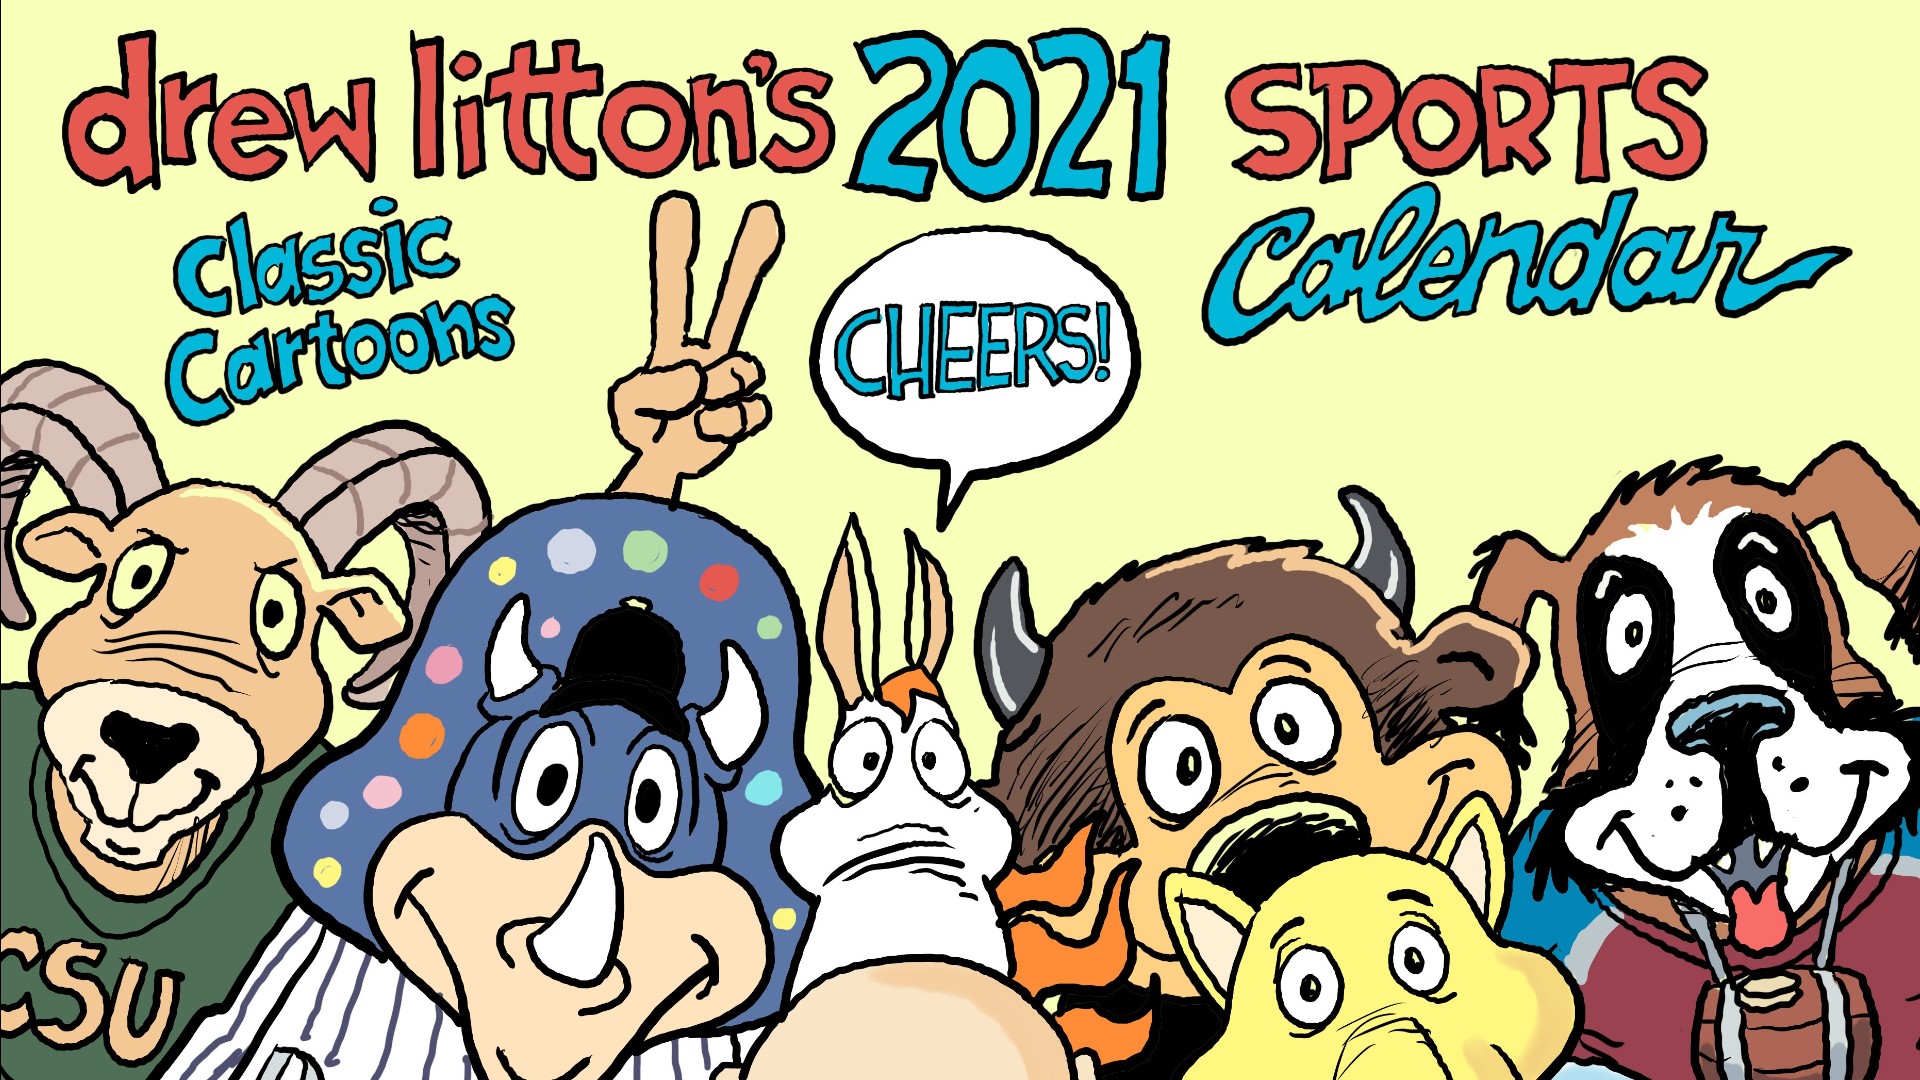 Drew Litton's 2021 12-month Sports Calendar is full of hilarious, classic cartoons.